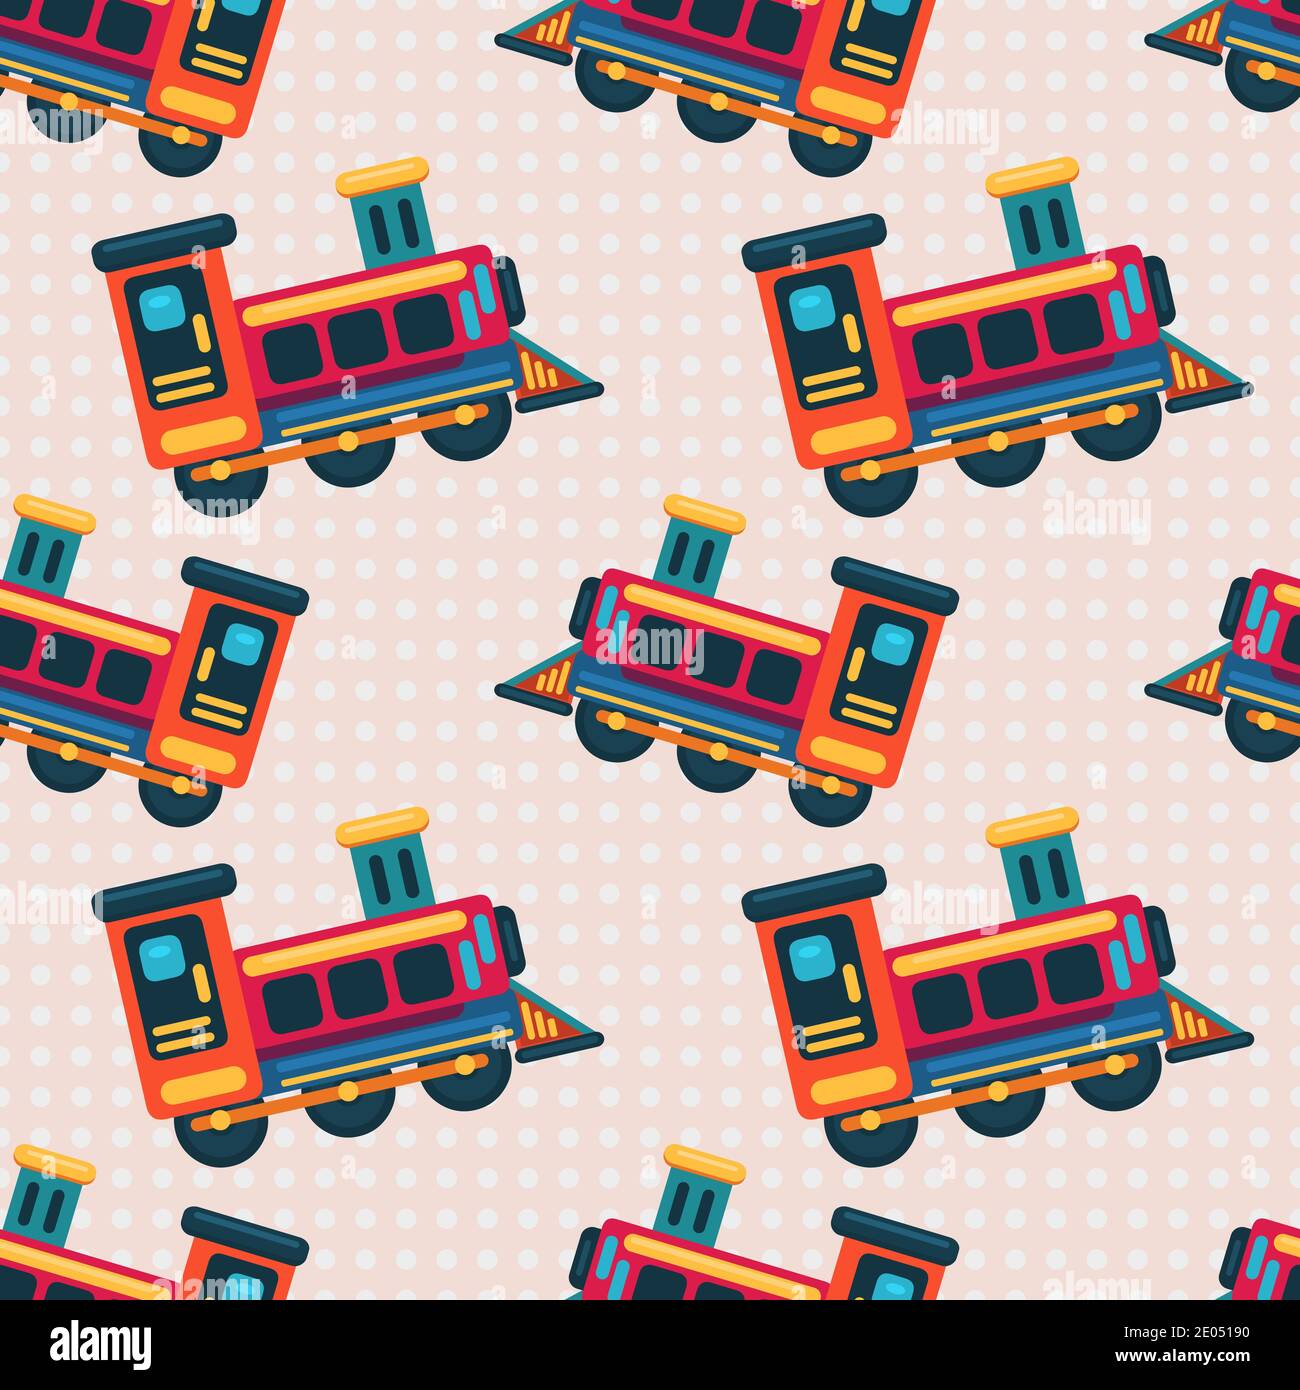 locomotive toy seamless pattern vector illustration Stock Vector